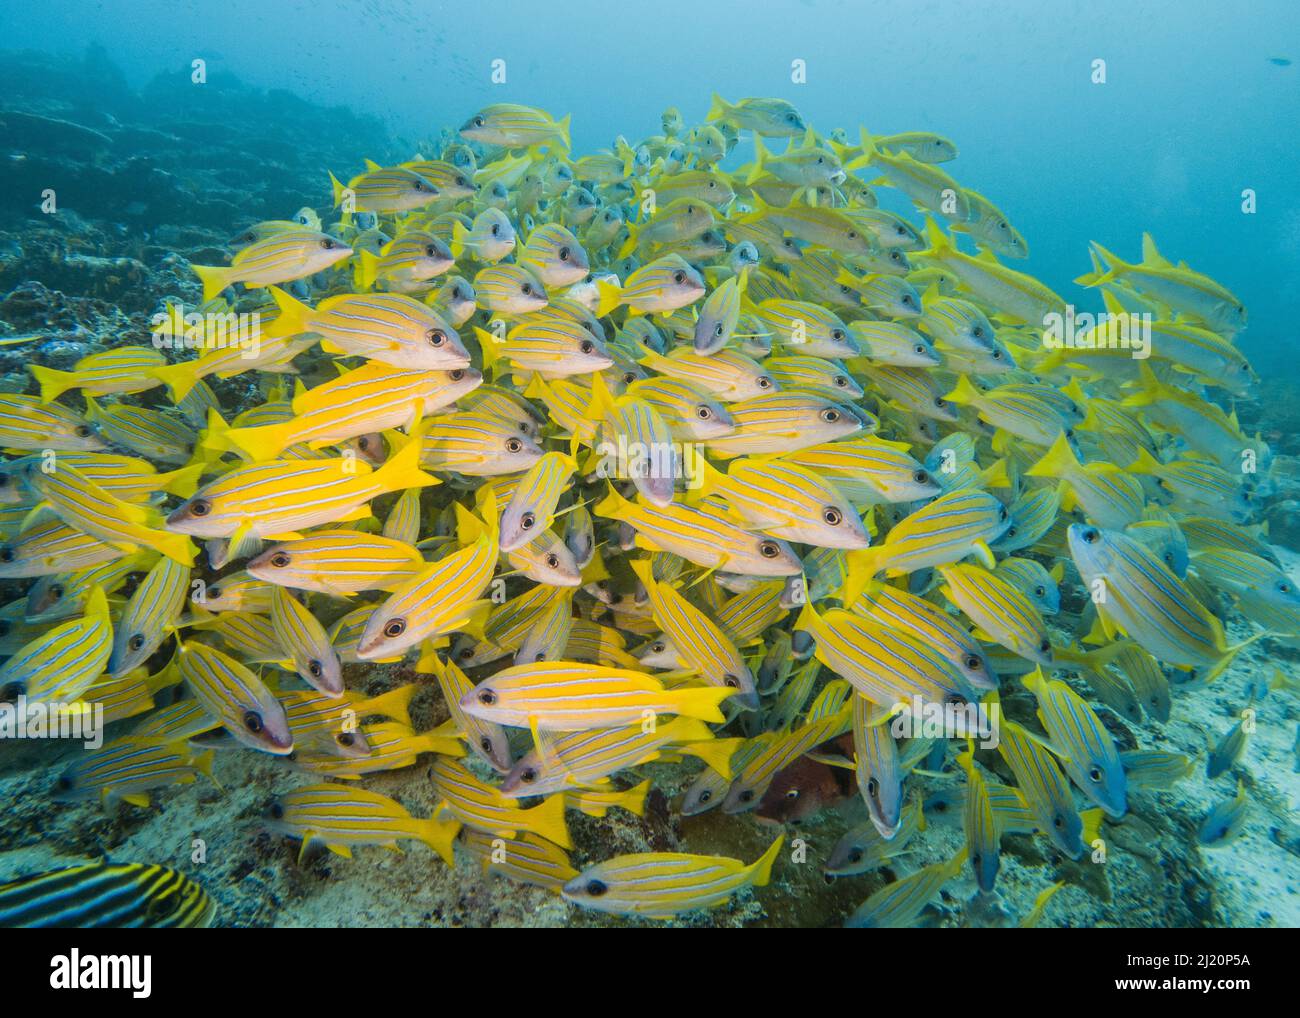 Large shoal of common bluestripe snapper fish lutjanus kasmira underwater on tropical coral reef Stock Photo